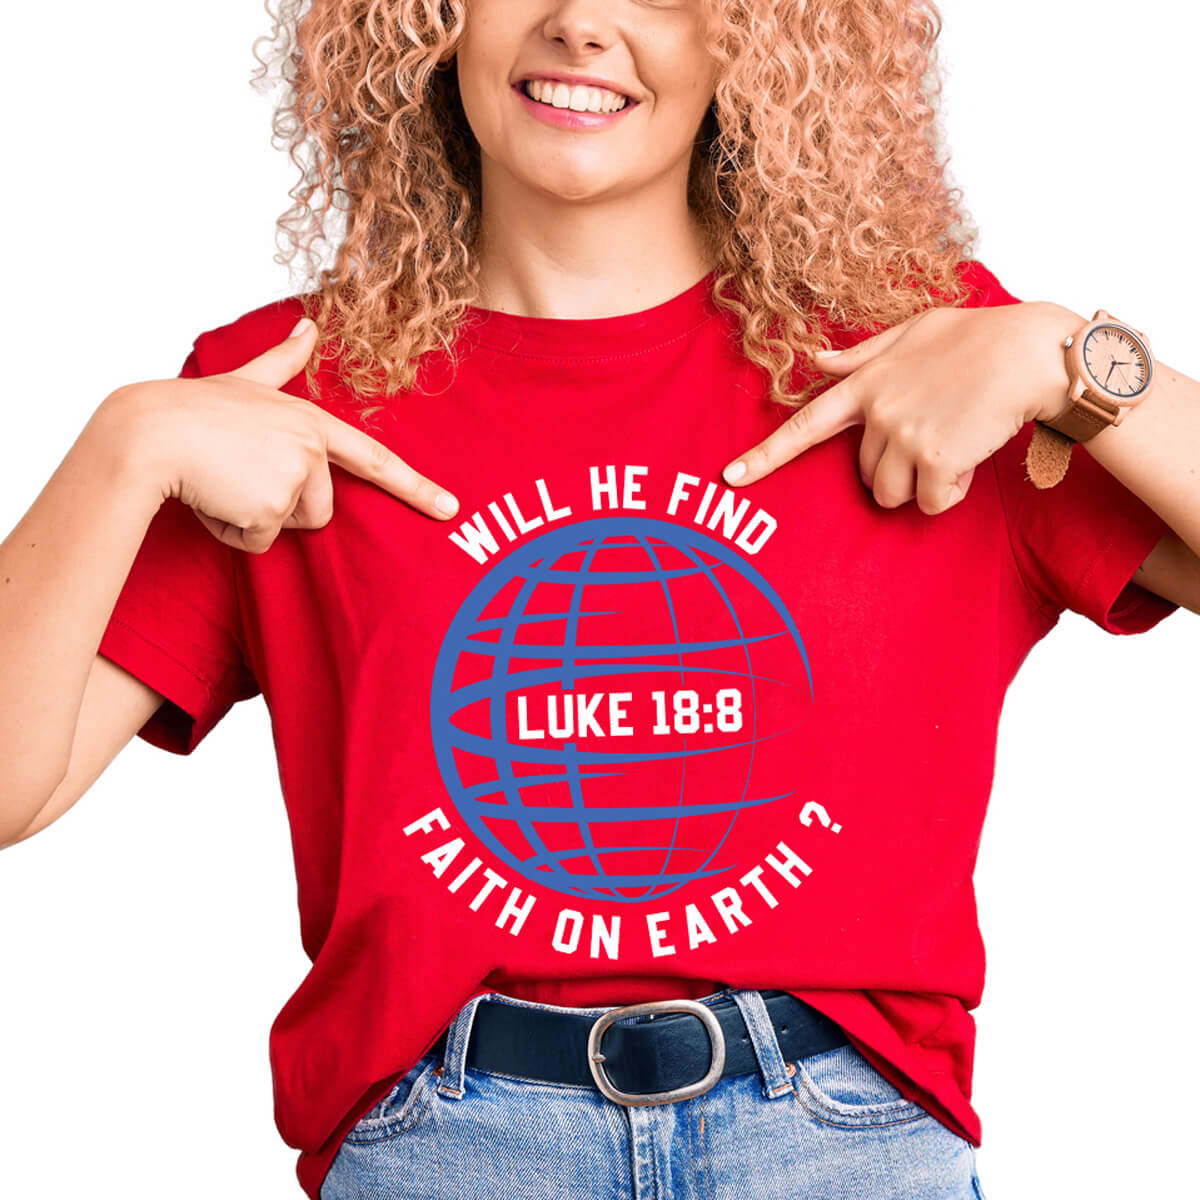 Will He Find Faith On Earth? T-Shirt